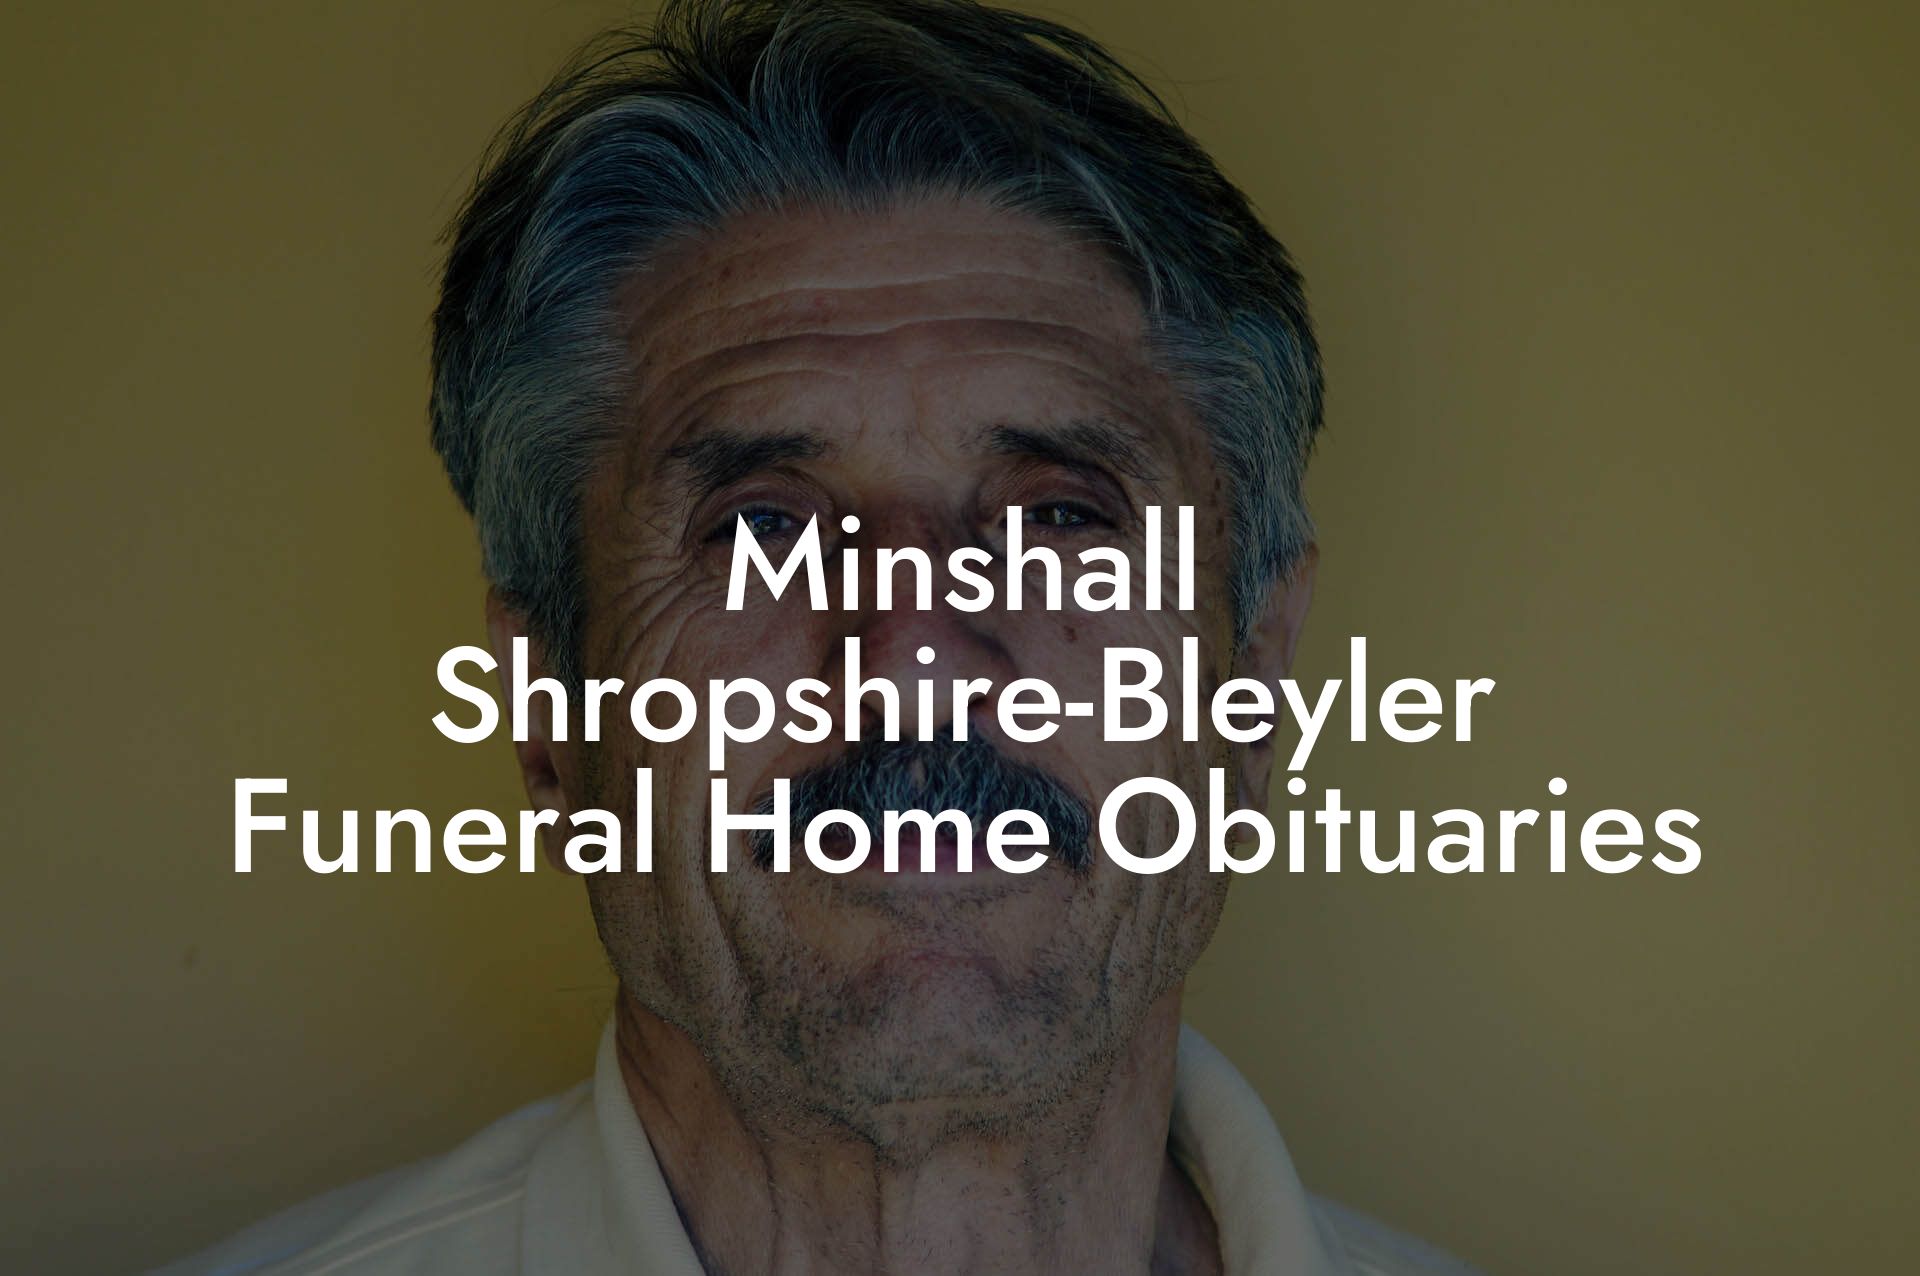 Minshall Shropshire-Bleyler Funeral Home Obituaries